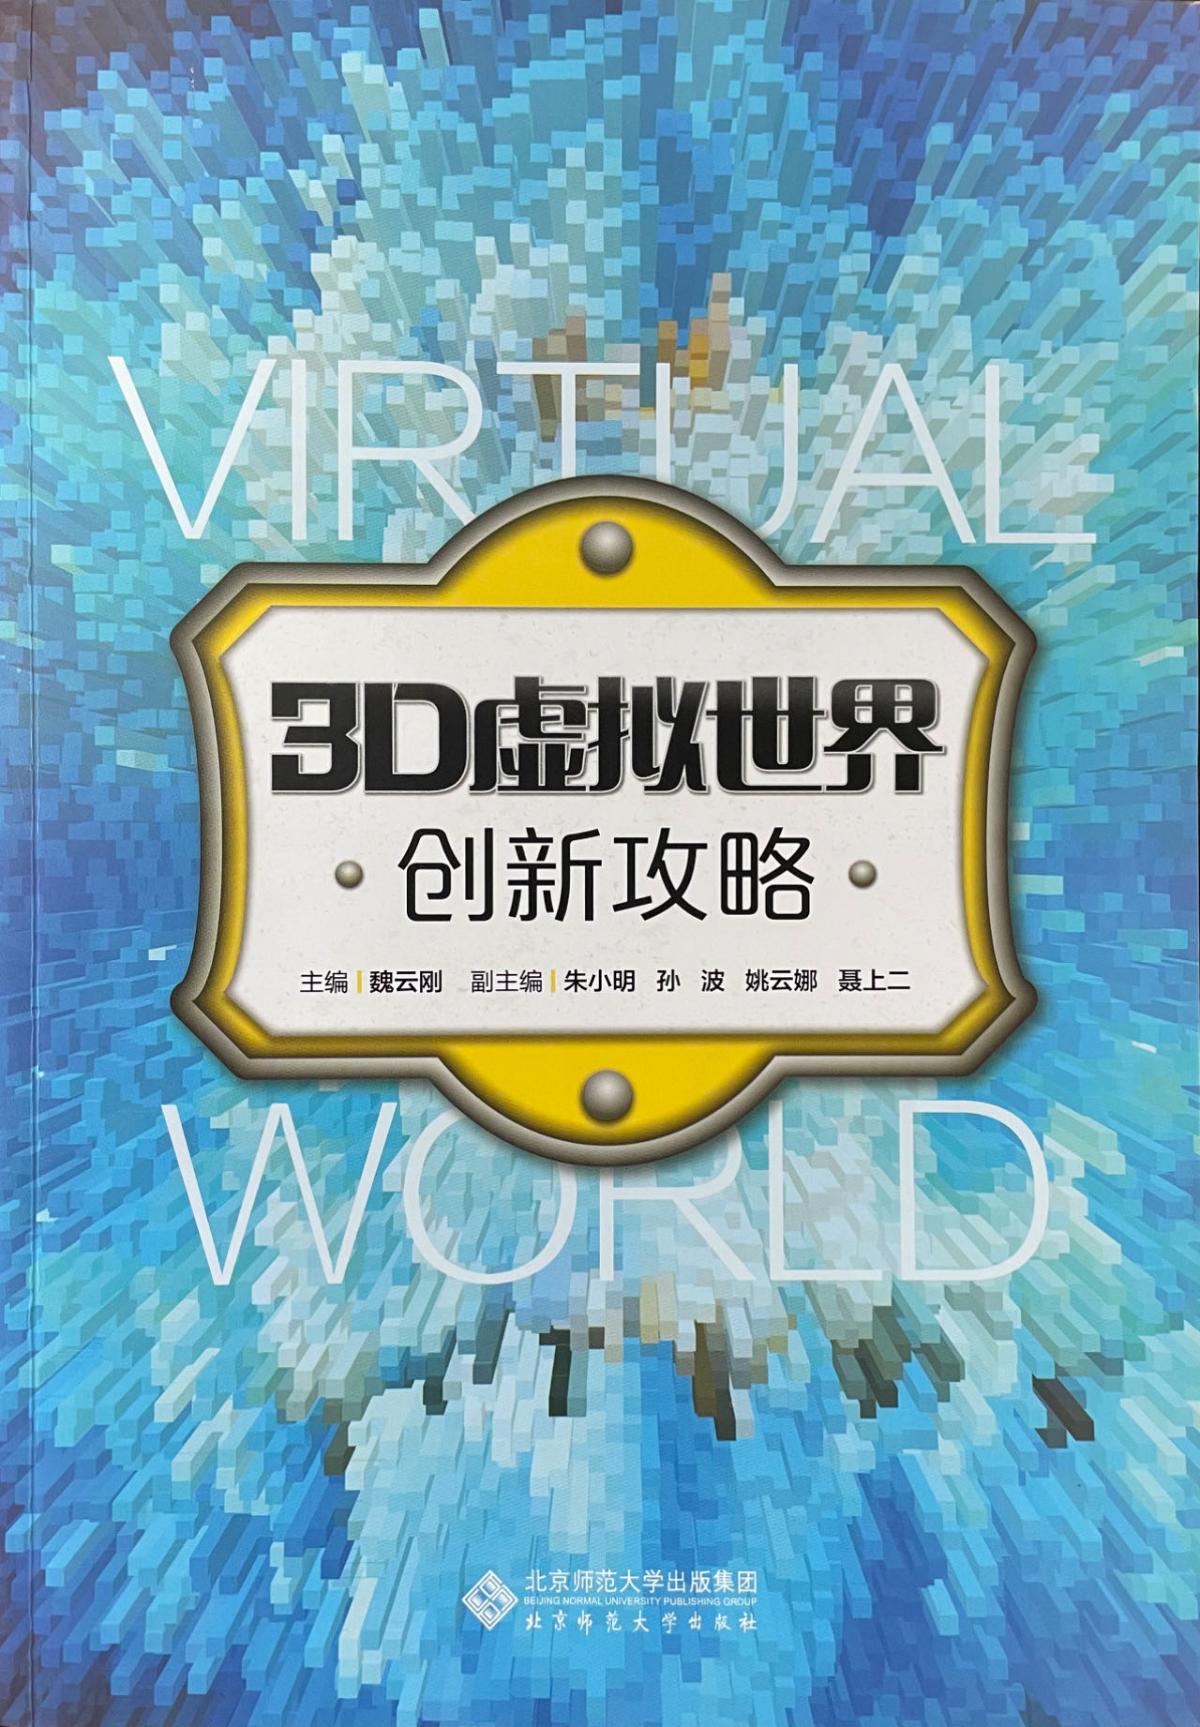 3D虚拟世界-创新攻略.jpg